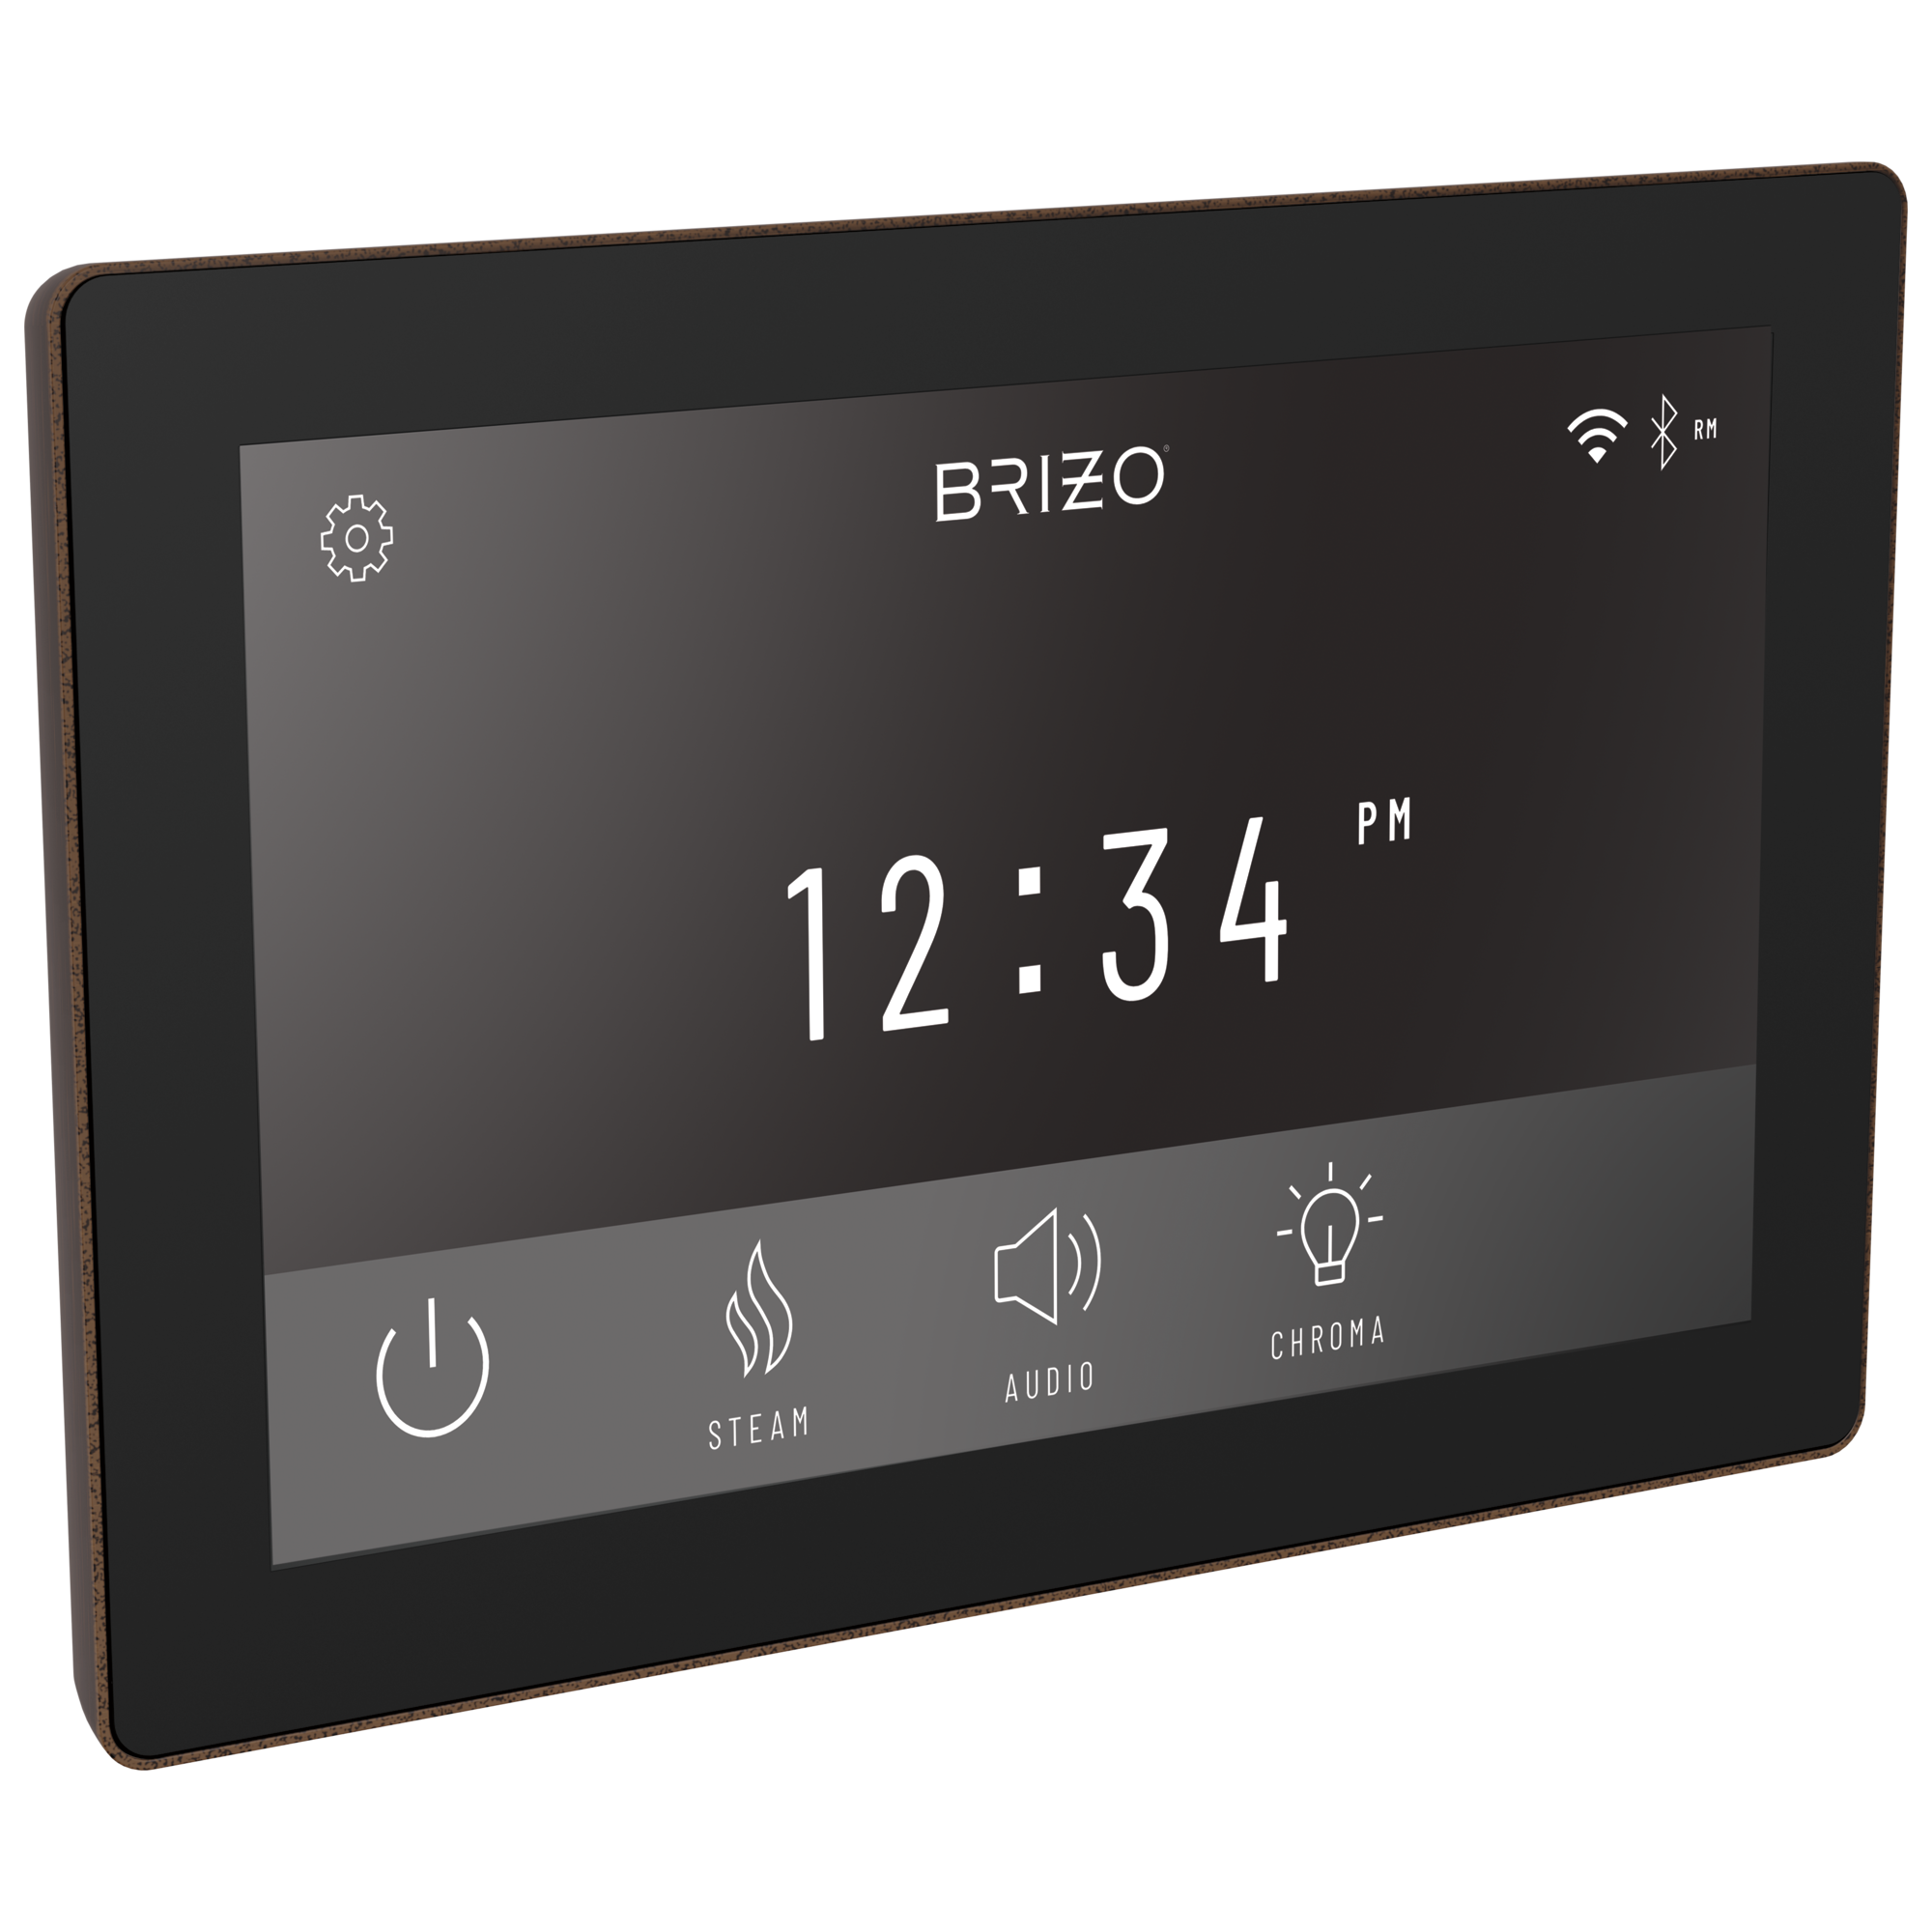 Brizo Digital Interface Controller